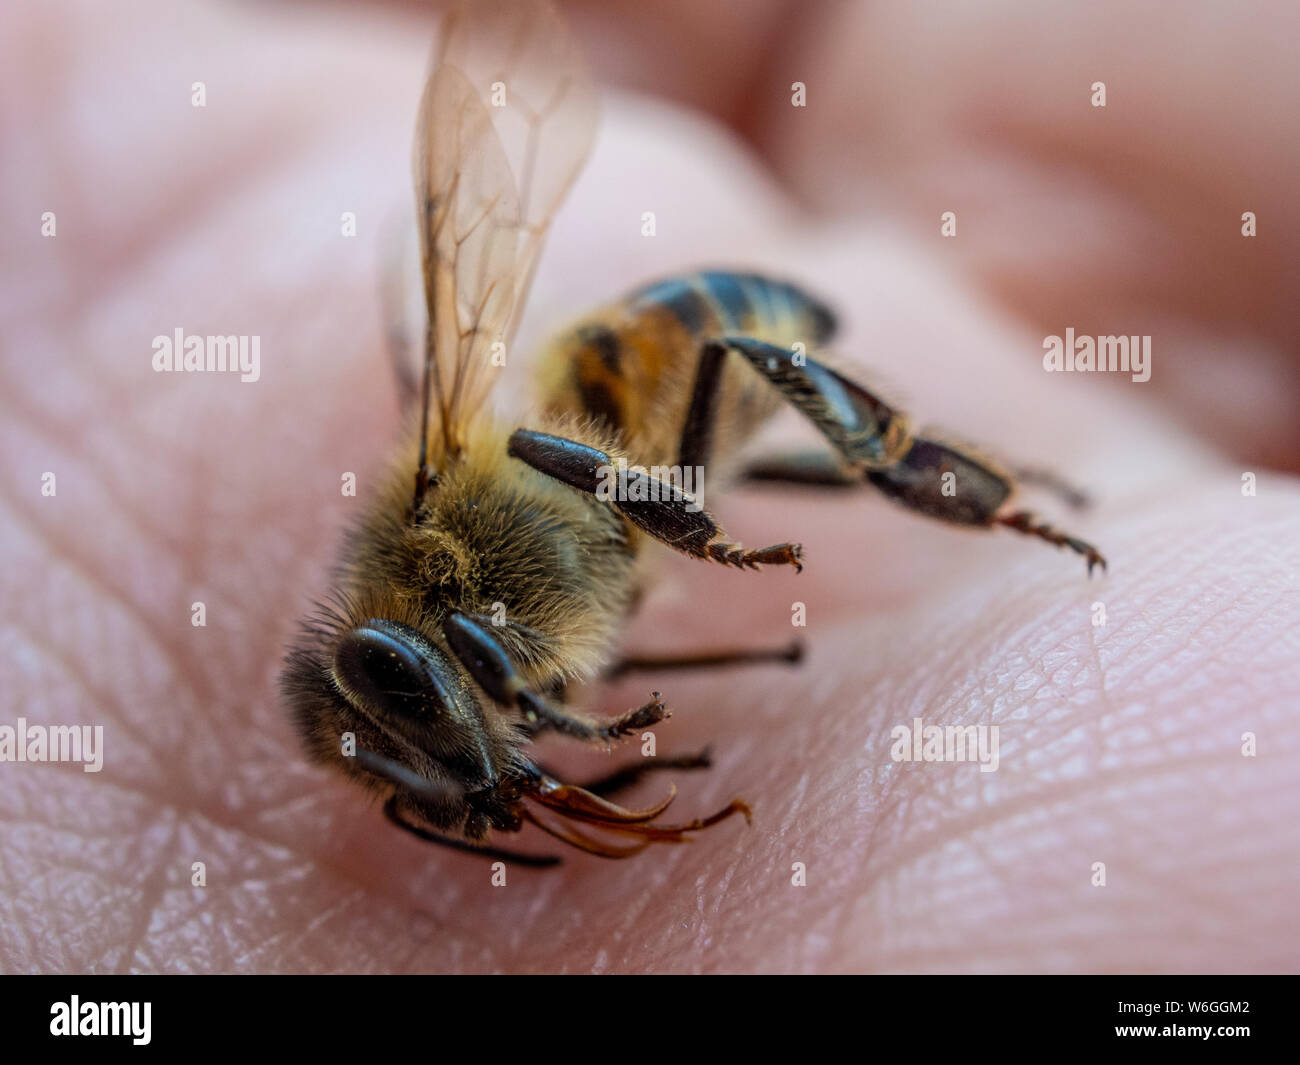 Detailed macro of a bee on human hand, illustrates honey bee mortality Stock Photo